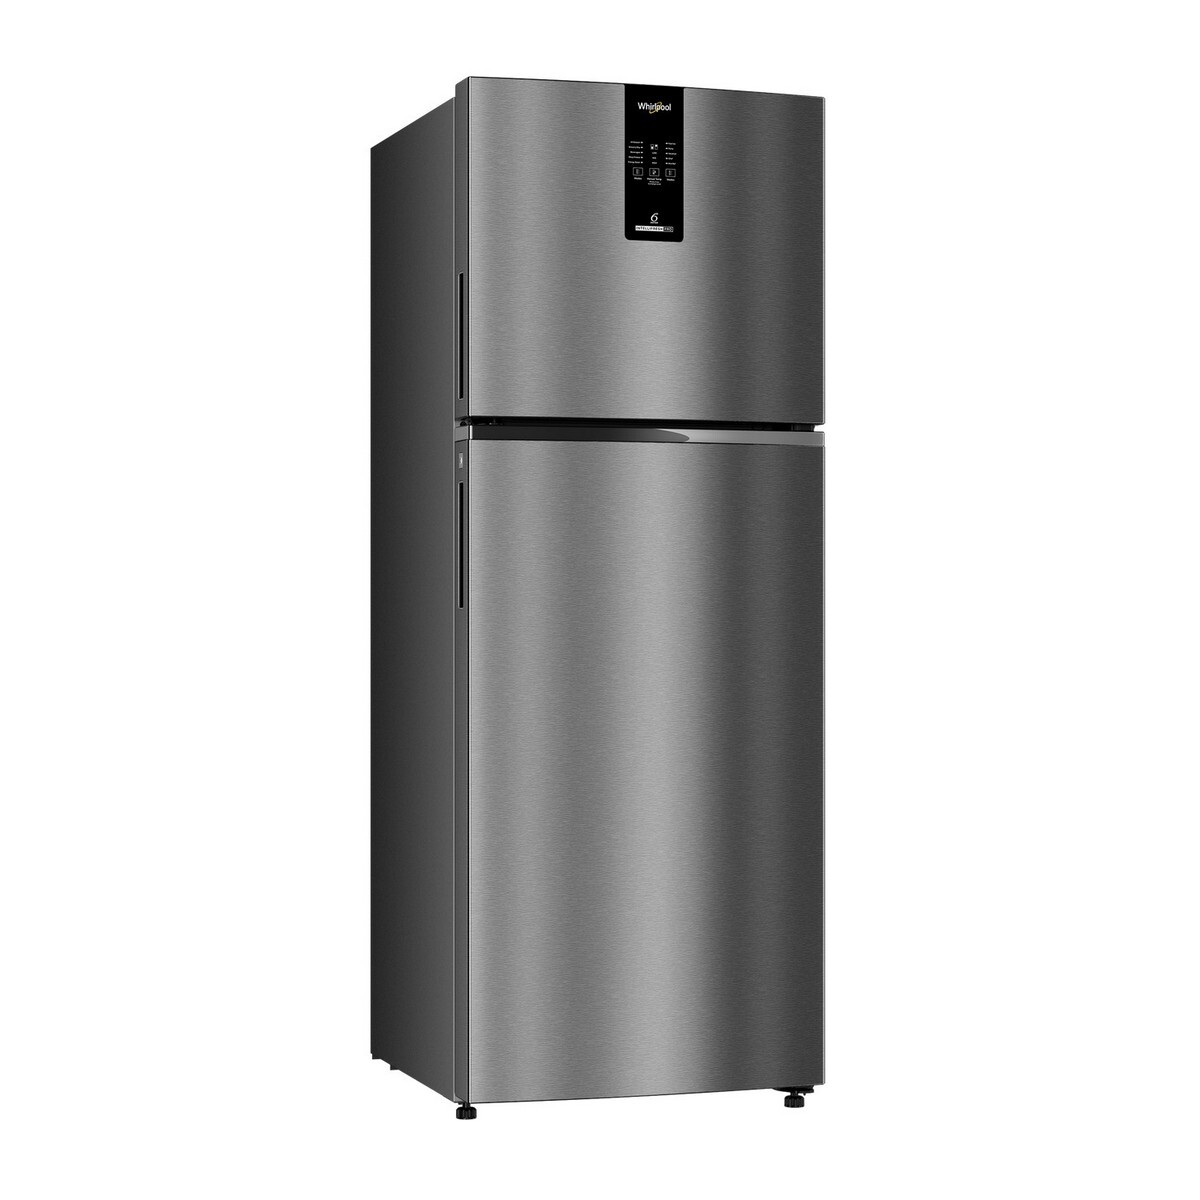 Whirlpool Intellifresh Pro 308L Convertible Frost Free Double-Door Refrigerator Cnv355 Alpha Steel